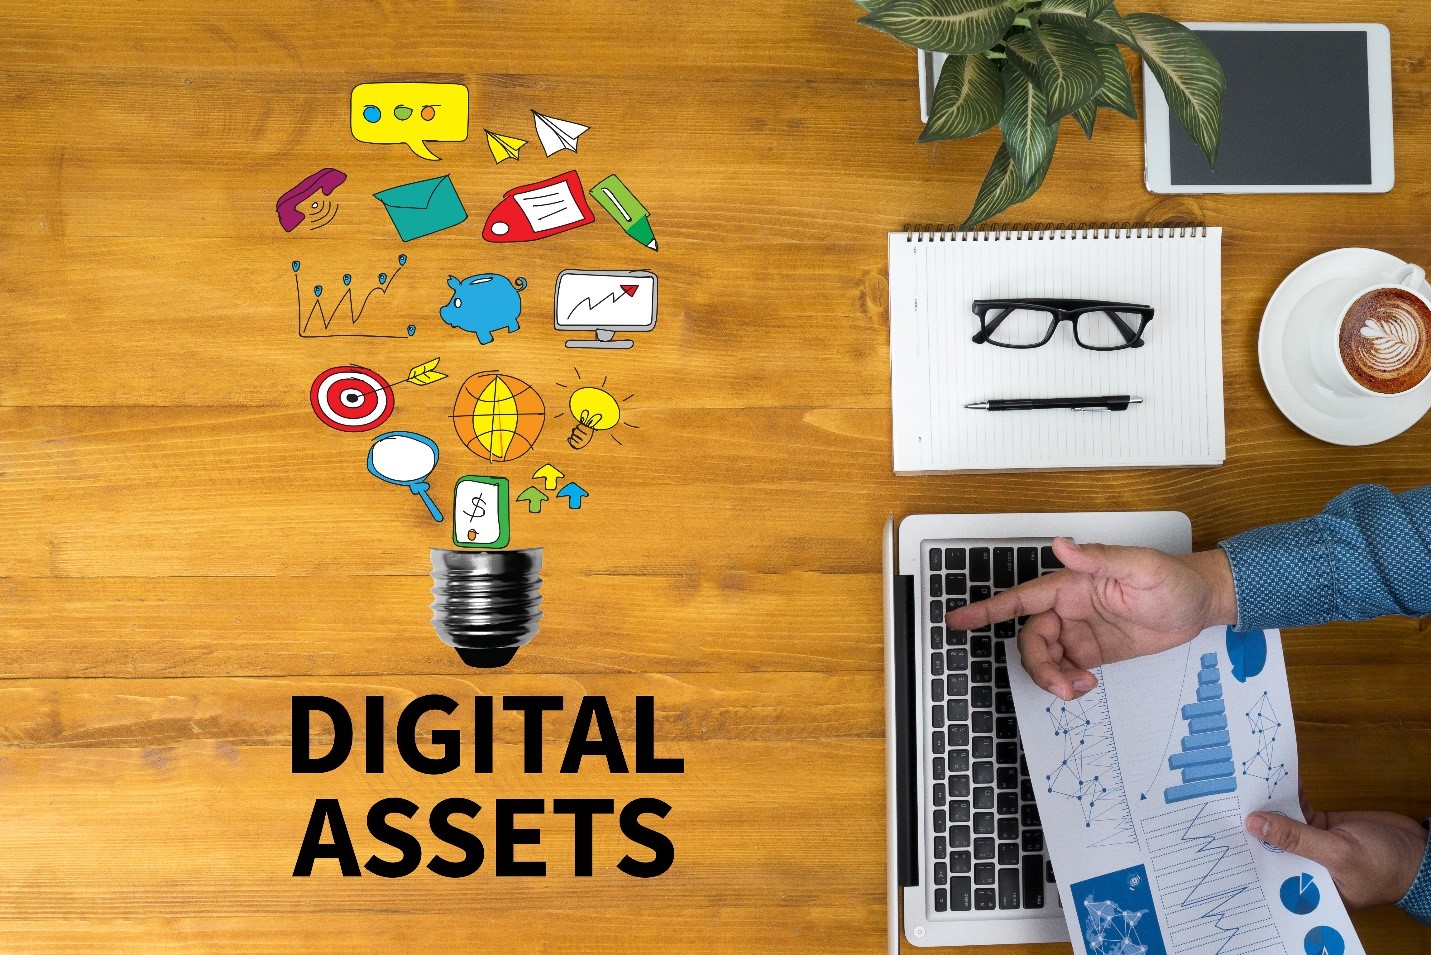 digital assets on wooden table